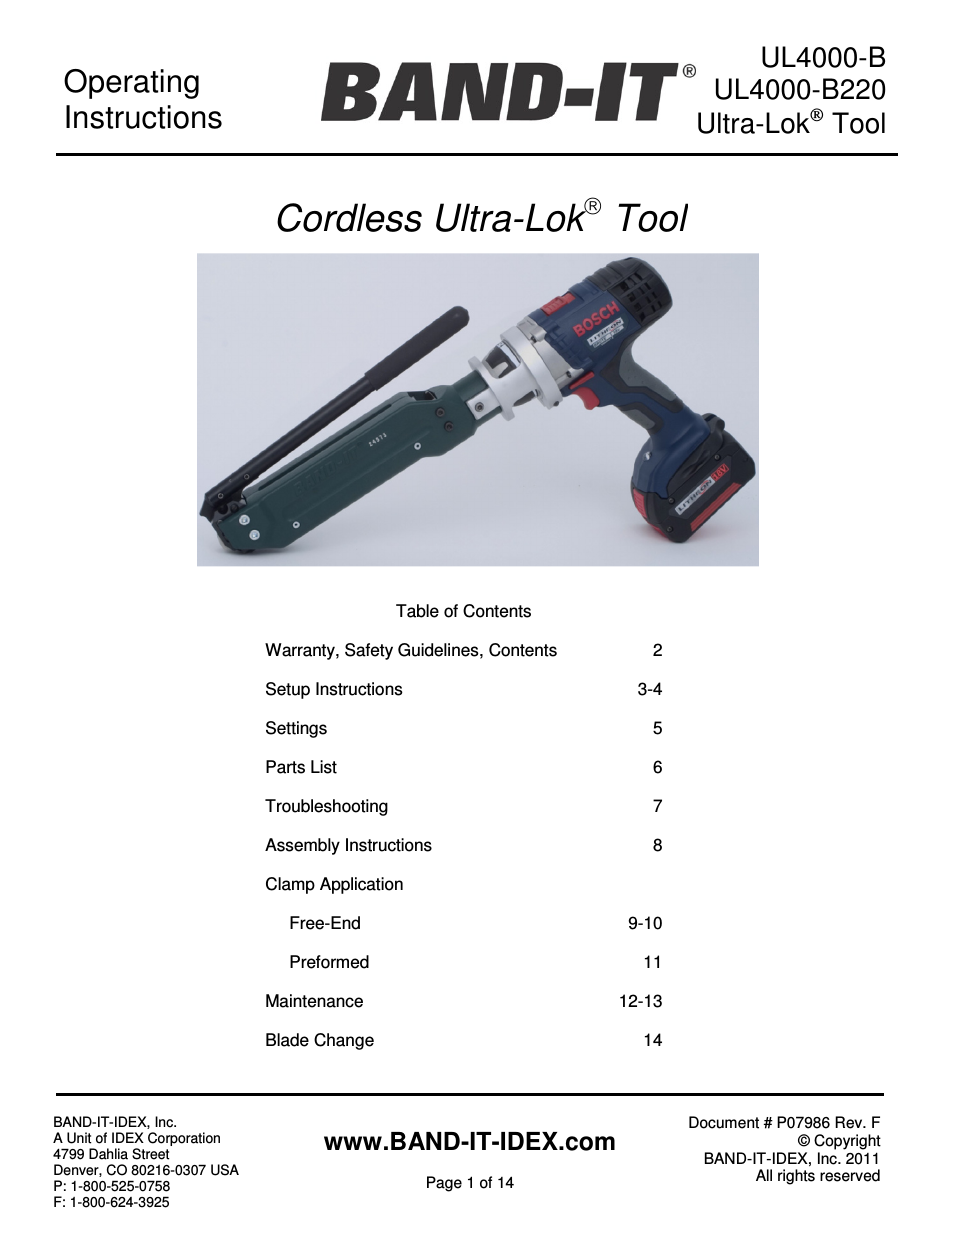 UL4000-B Cordless Ultra-Lok Tool